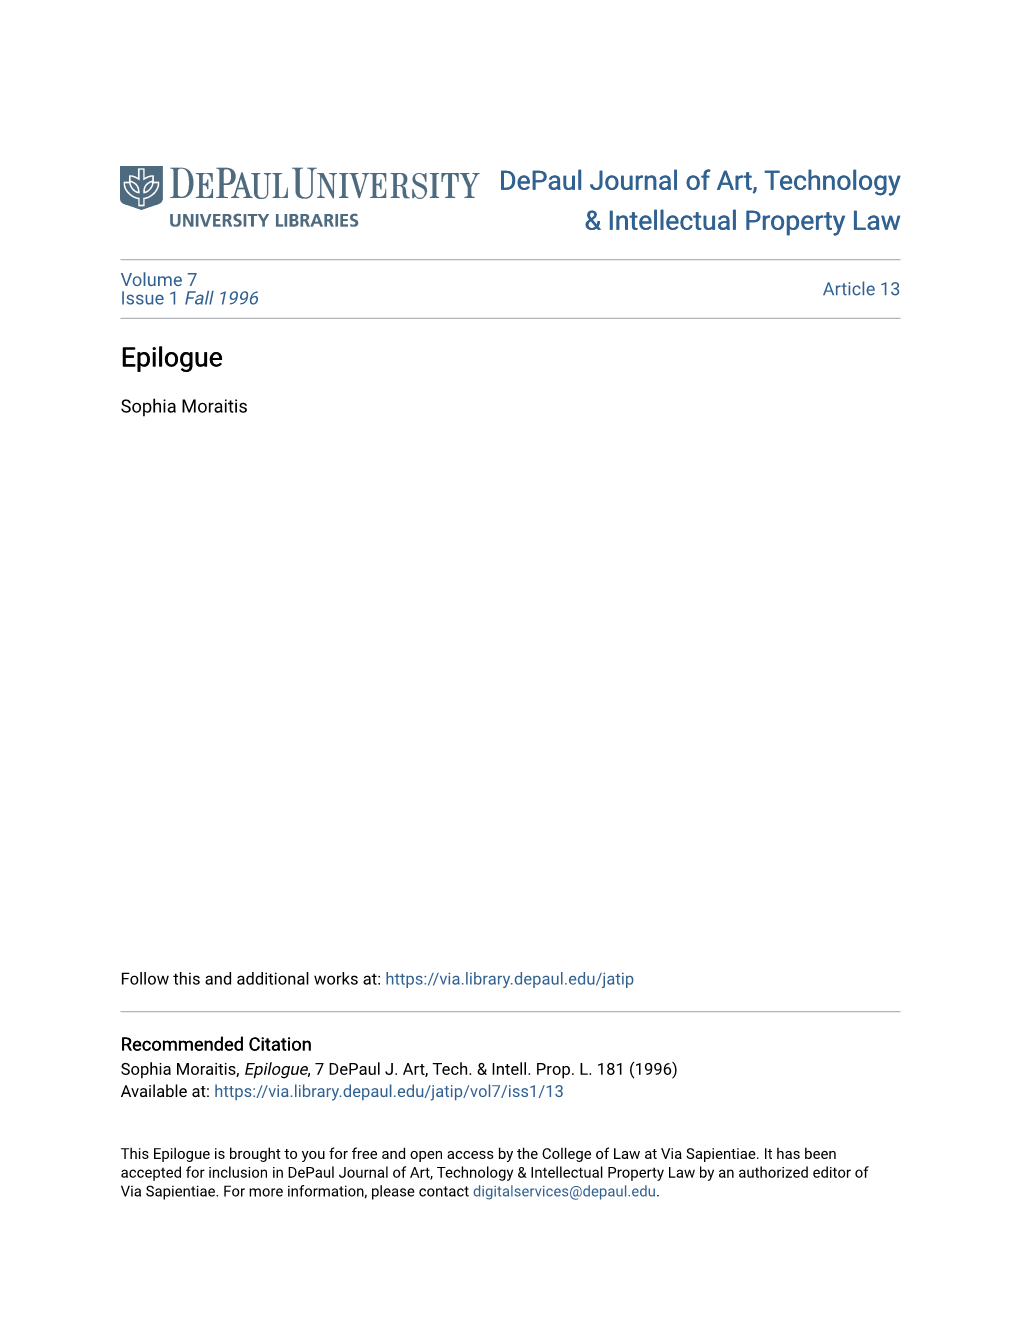 Depaul Journal of Art, Technology & Intellectual Property Law Epilogue